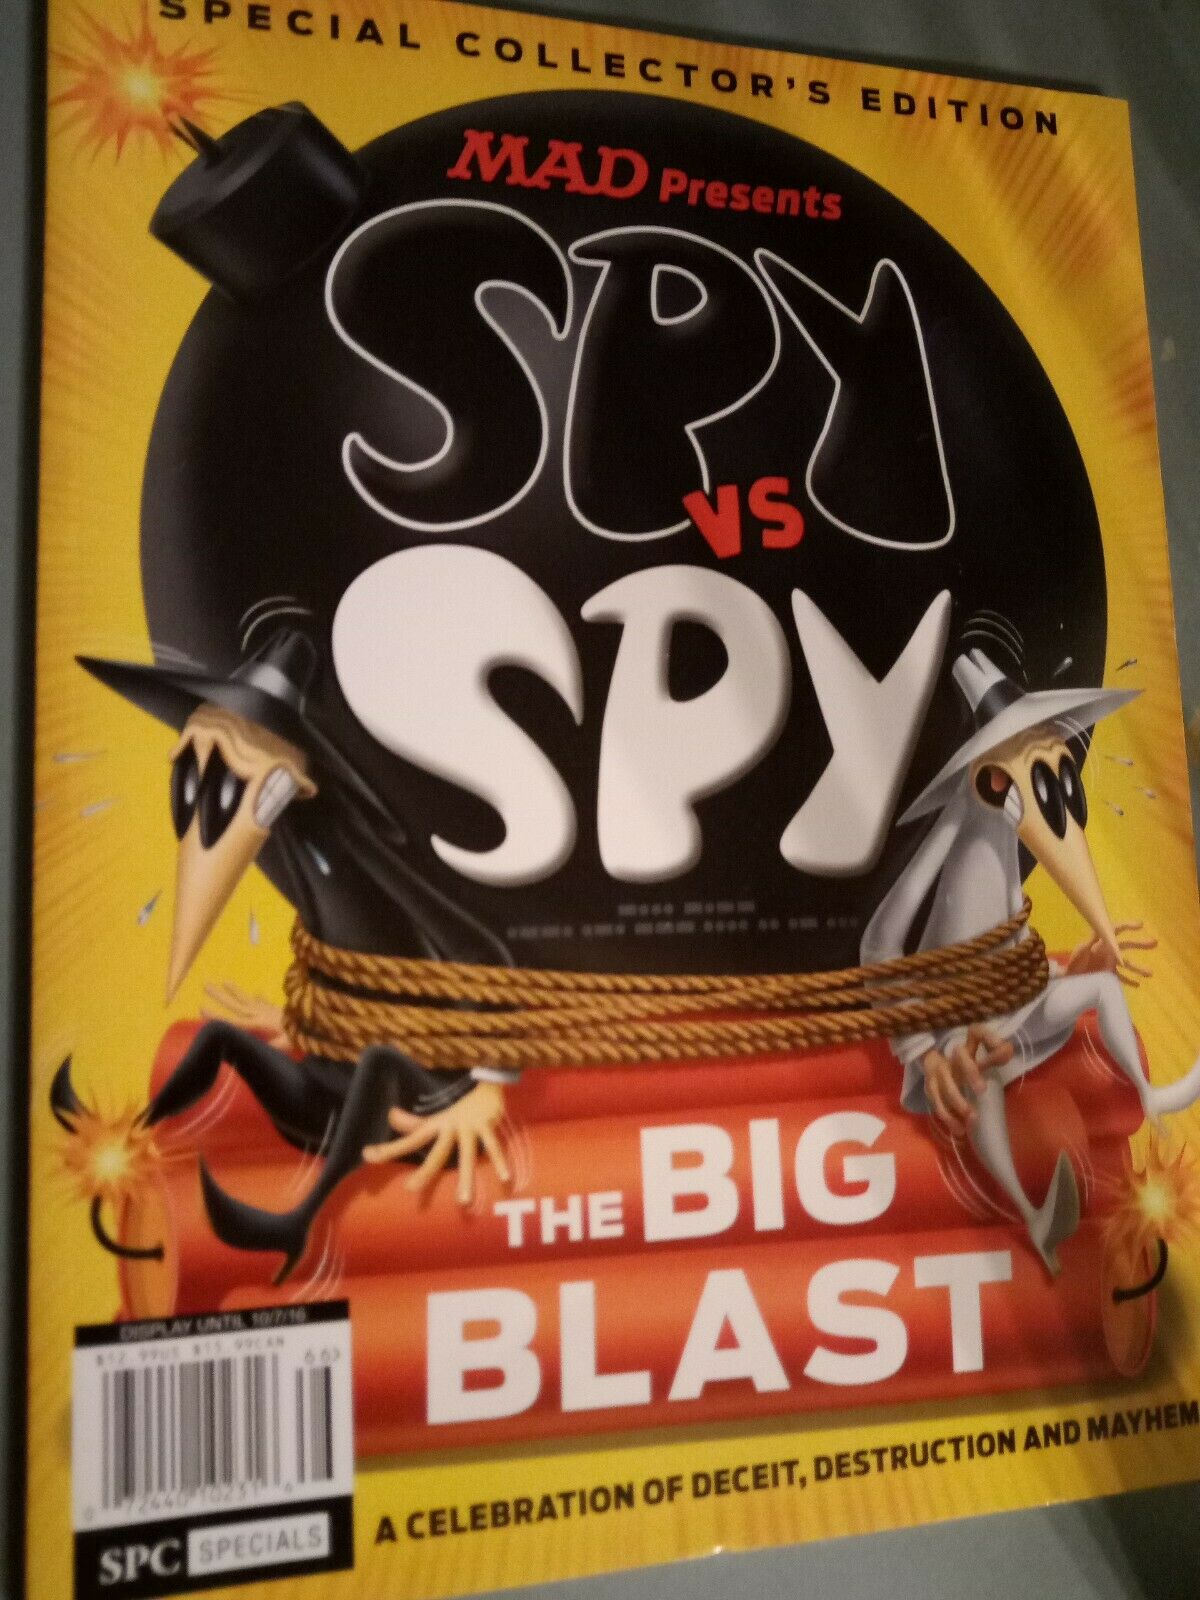 Spy Vs Spy The Big Blast Mad Magazine Special Collector's Edition 2016